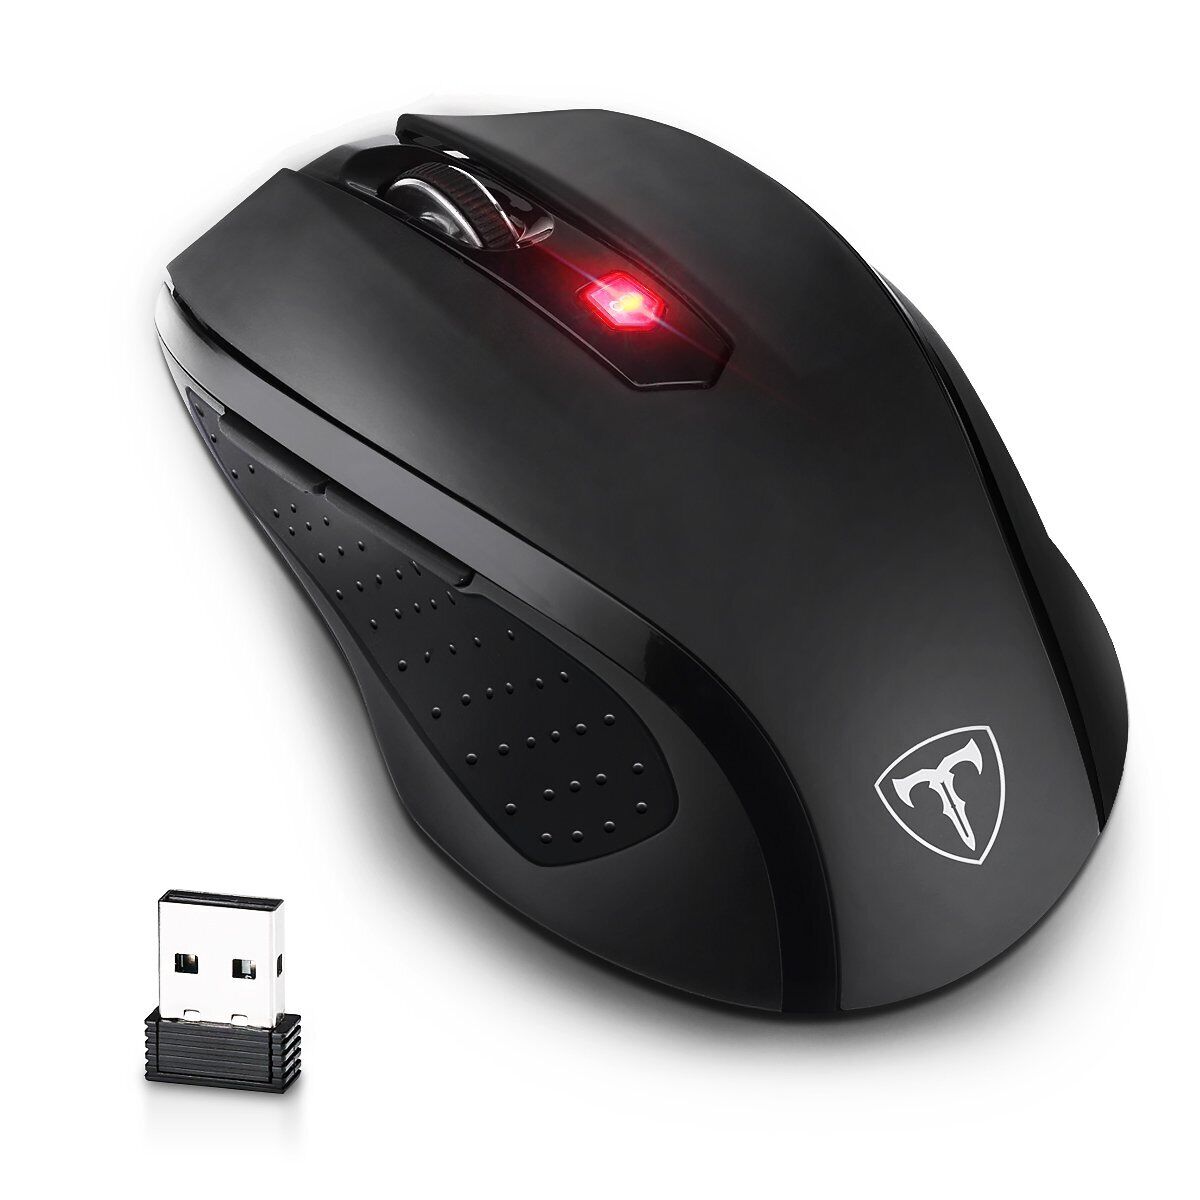 VicTsing 2.4G Ergonomic Optical Gaming Mouse 2400DPI Mice For Laptop PC Win10 OS